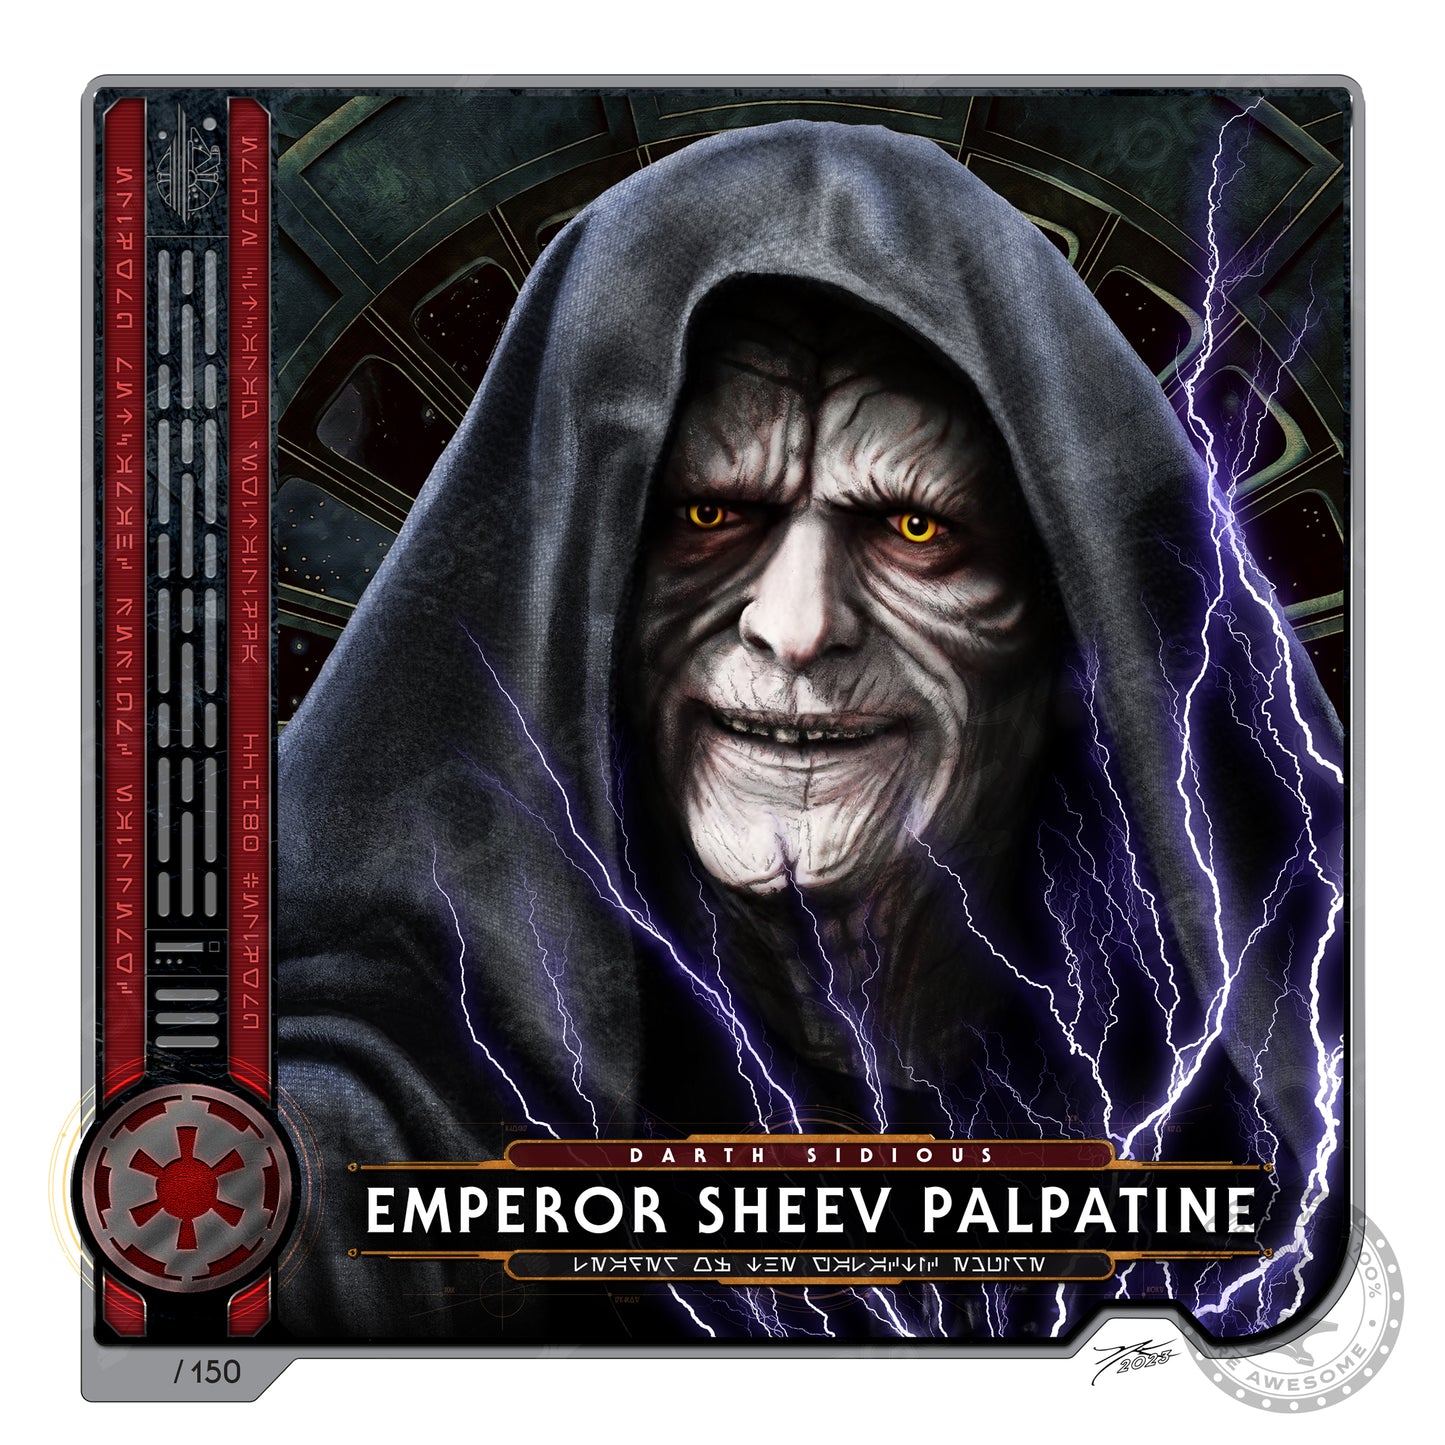 "Darth Sidious (Sheev Palpatine) • Emperor of the Galactic Empire" REFORGED Portrait Art Mini-Print • Run of 150